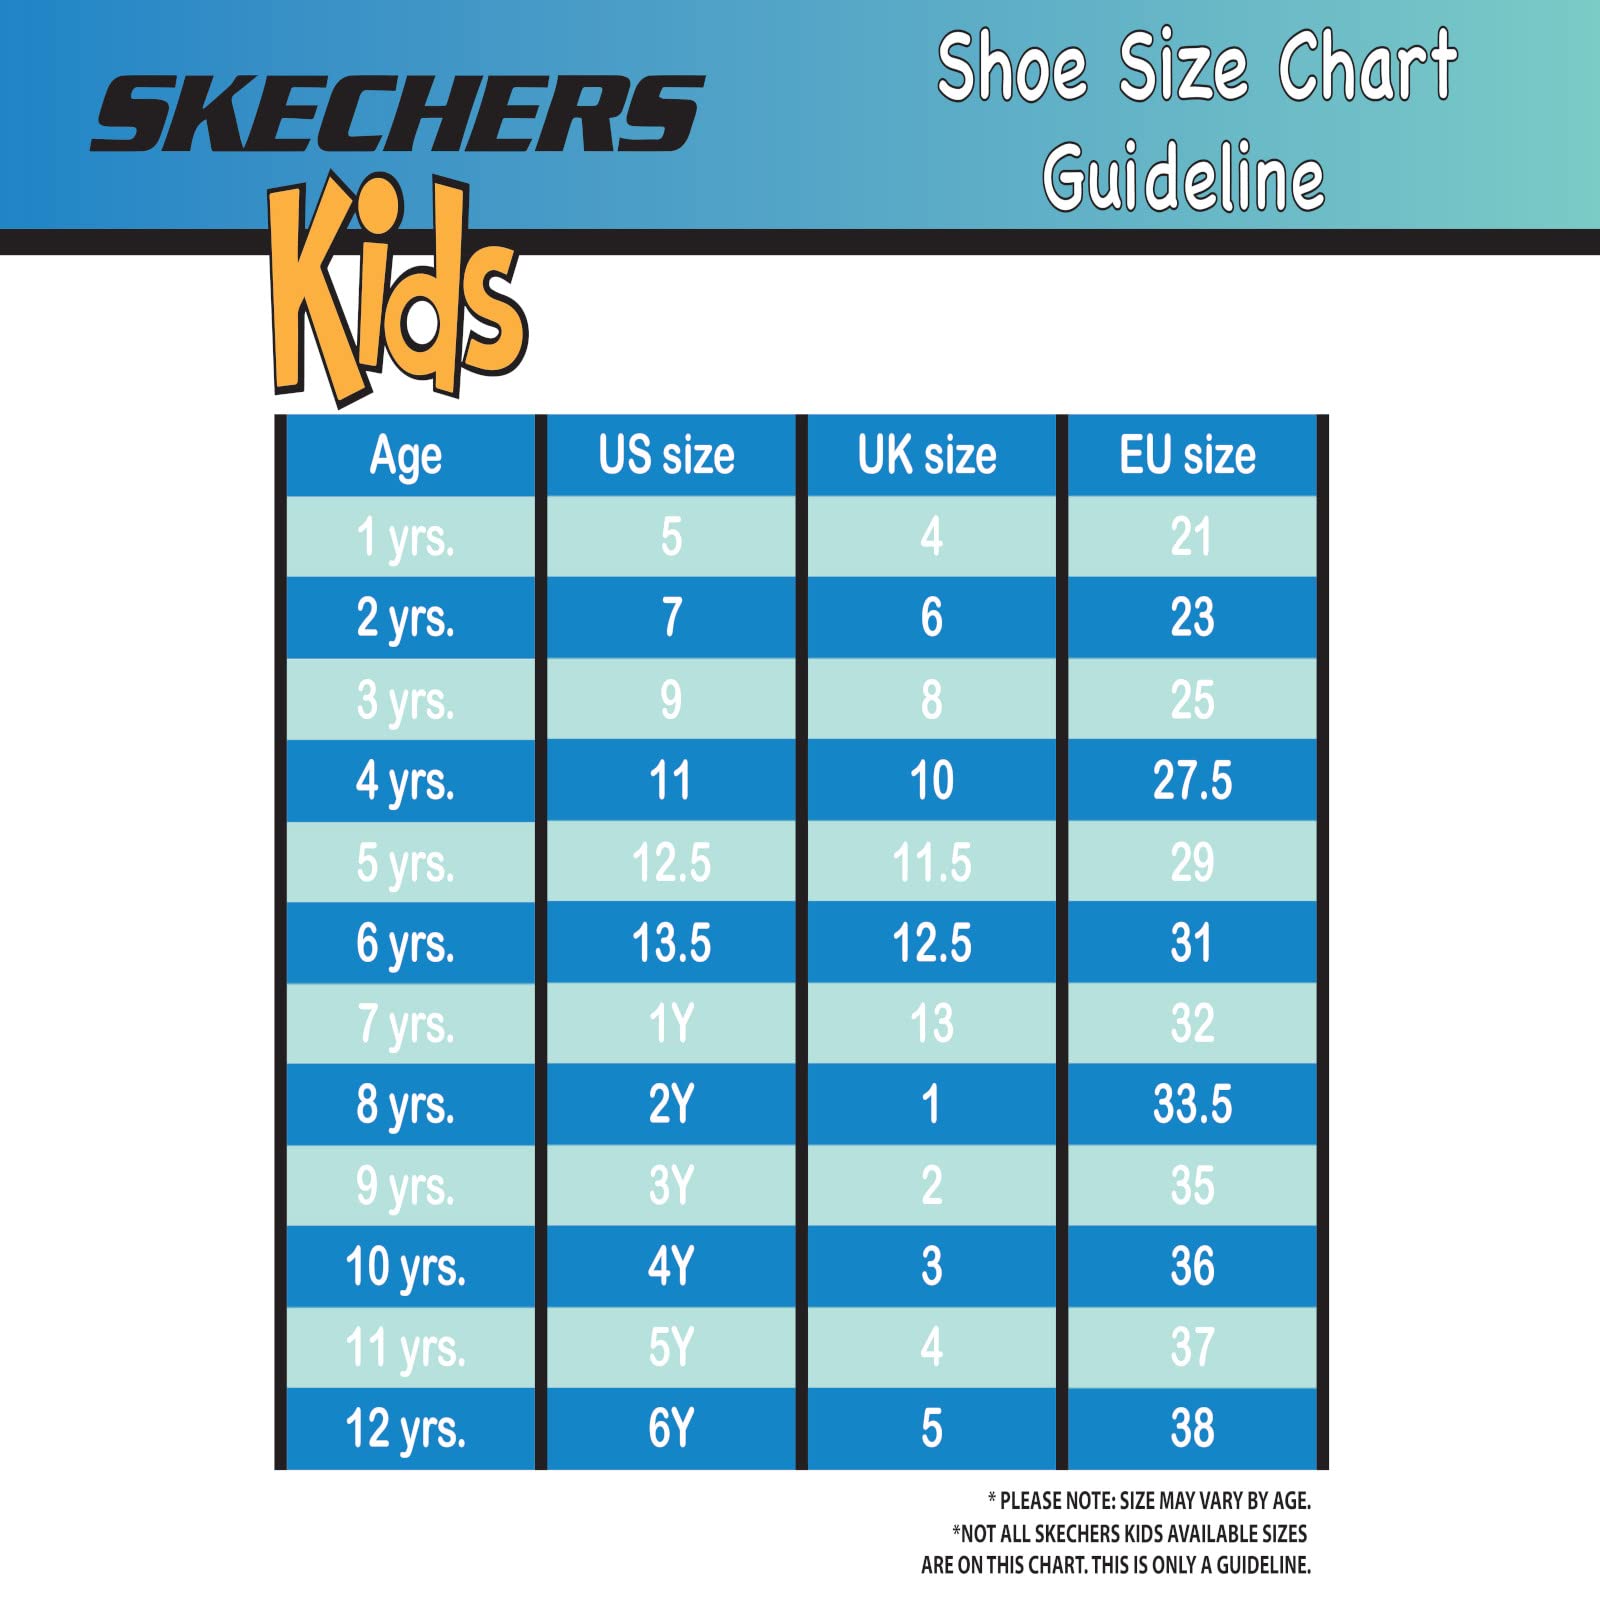 Skechers Unisex-Child Ultra Flex-Sherbet Step Sneaker